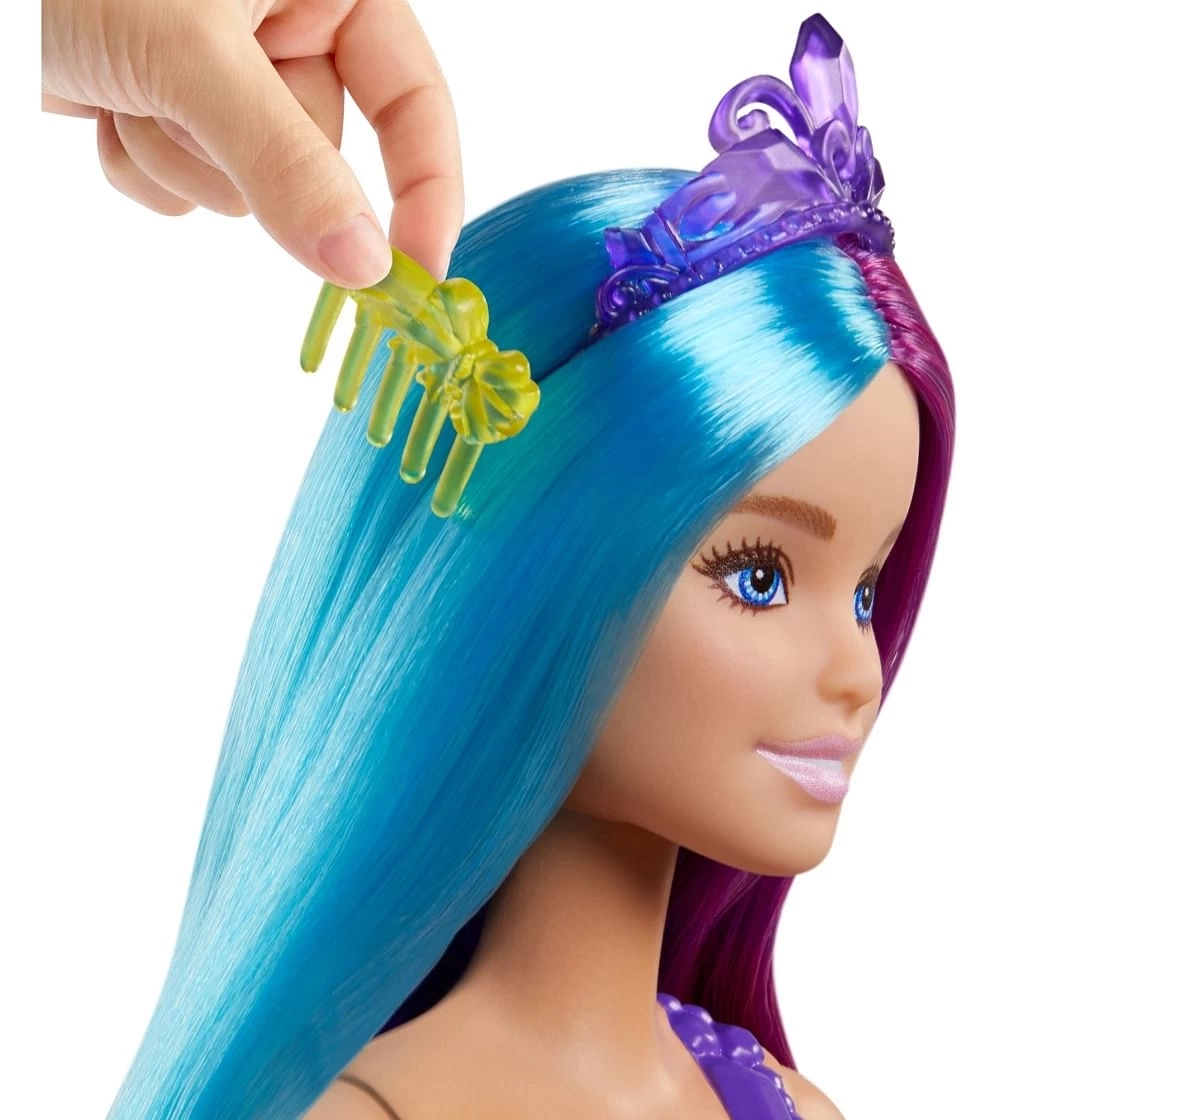 Barbie Long Hair Fantasy Doll Assortment, Barbie, 3Y+, Multicolour, Assorted